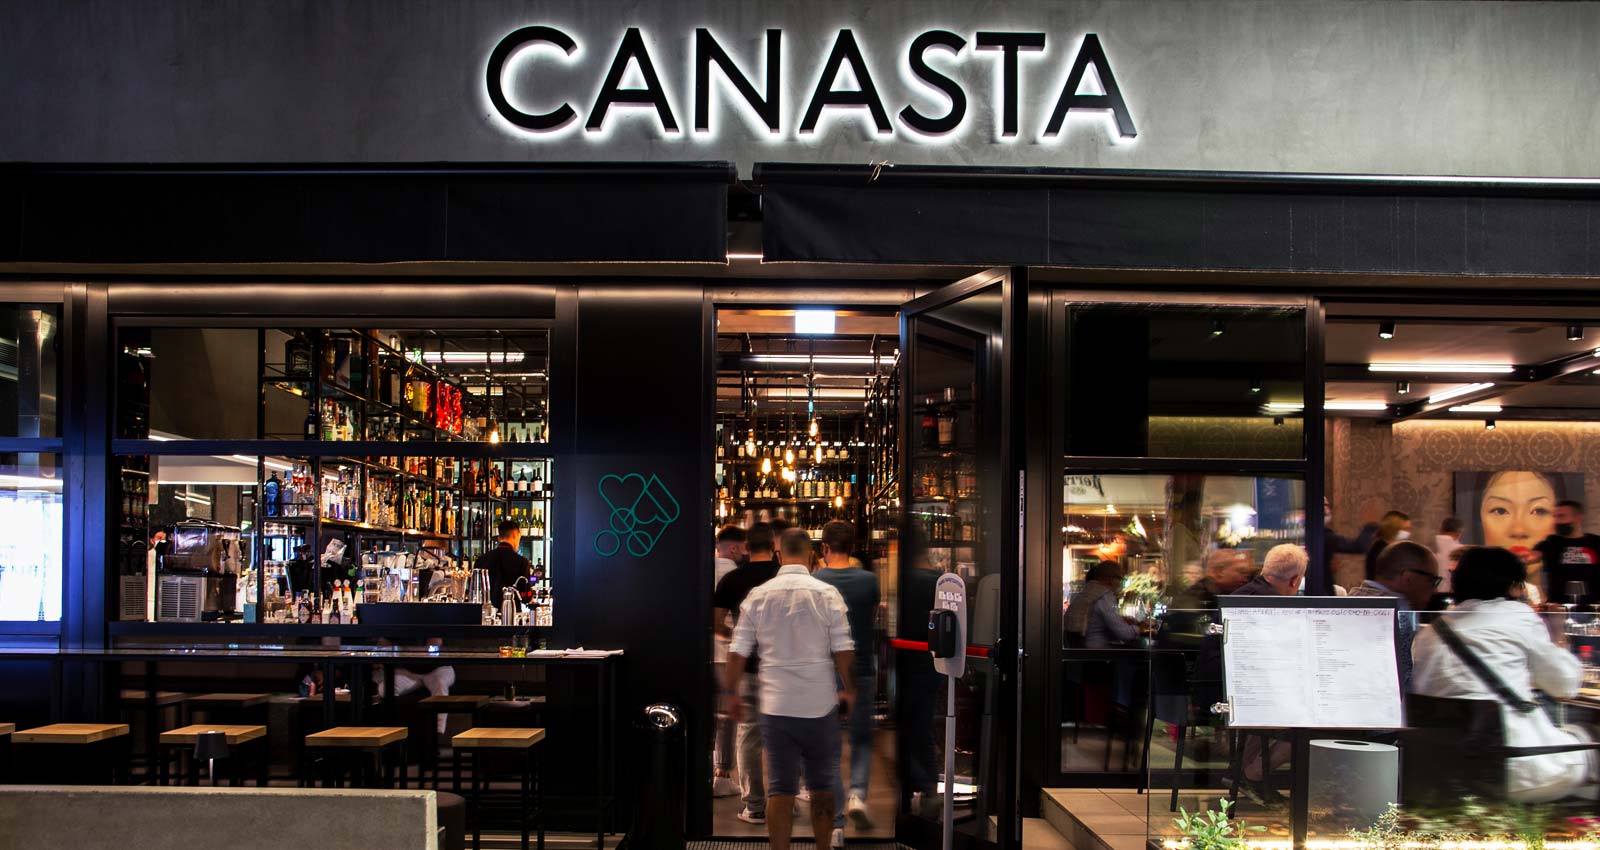 The Canasta Restaurant